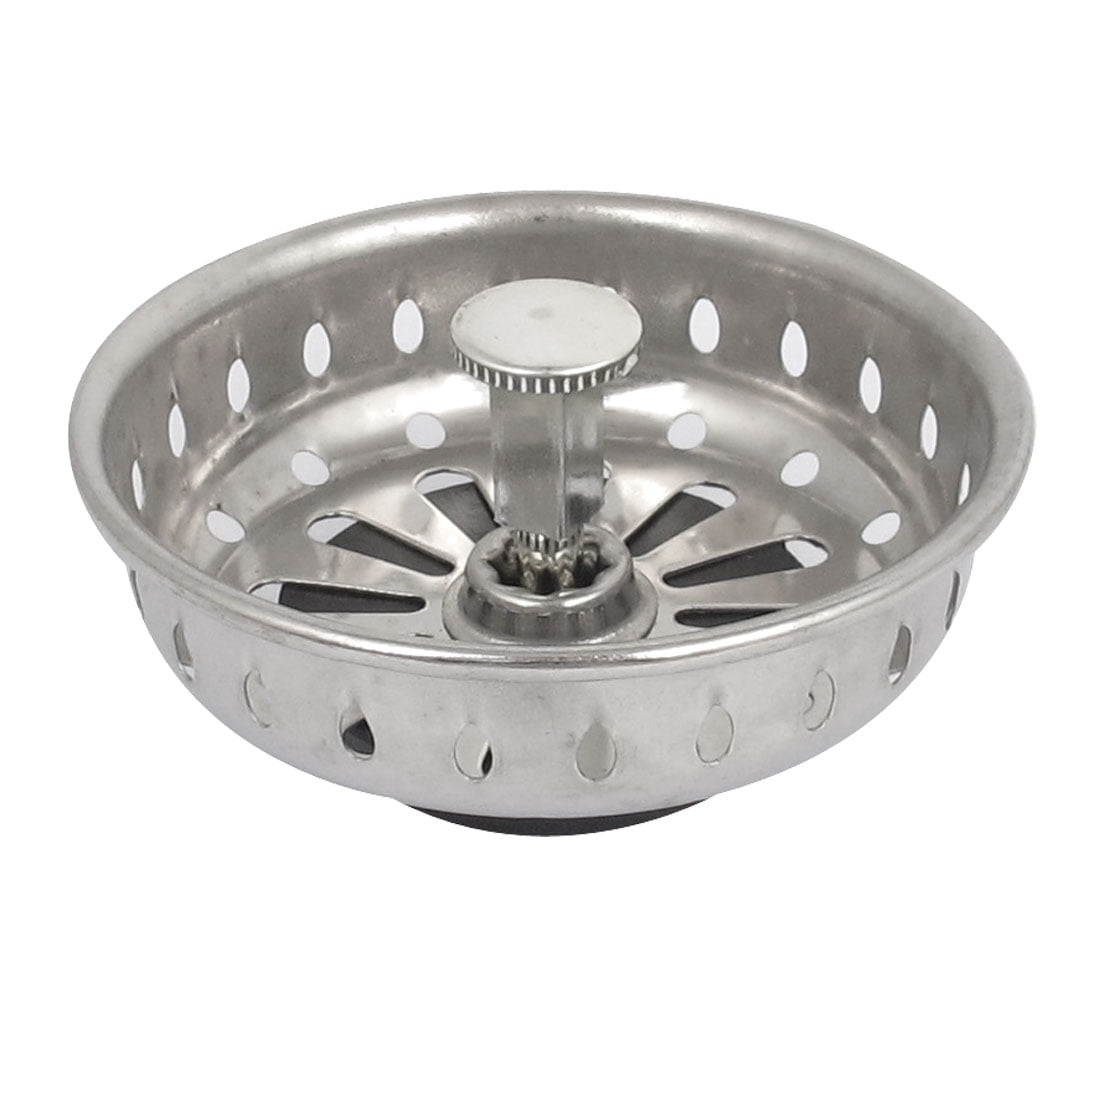 Details about   Stainless Steel Kitchen Sink Strainer Waste Plug Drain Stopper Filter Basket Hot 